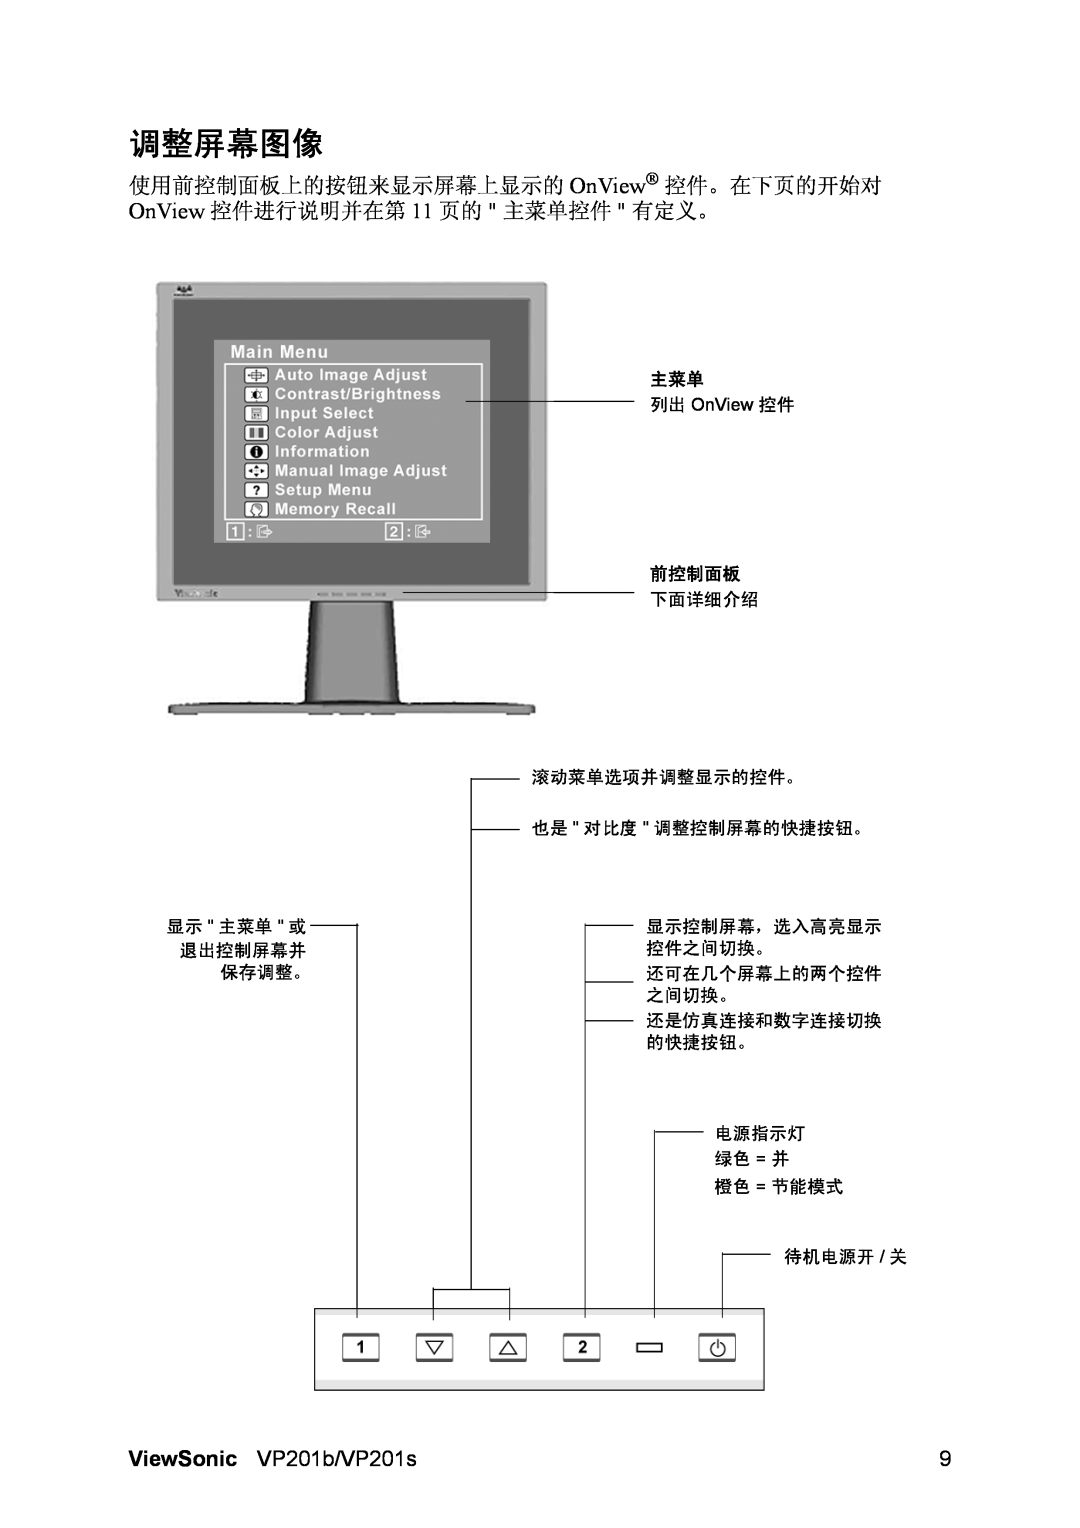 ViewSonic VP201 manual 调整屏幕图像, 显示 主菜单 或 退出控制屏幕并 保存调整。, 列出 OnView 控件, 前控制面板, 待机电源开 / 关 